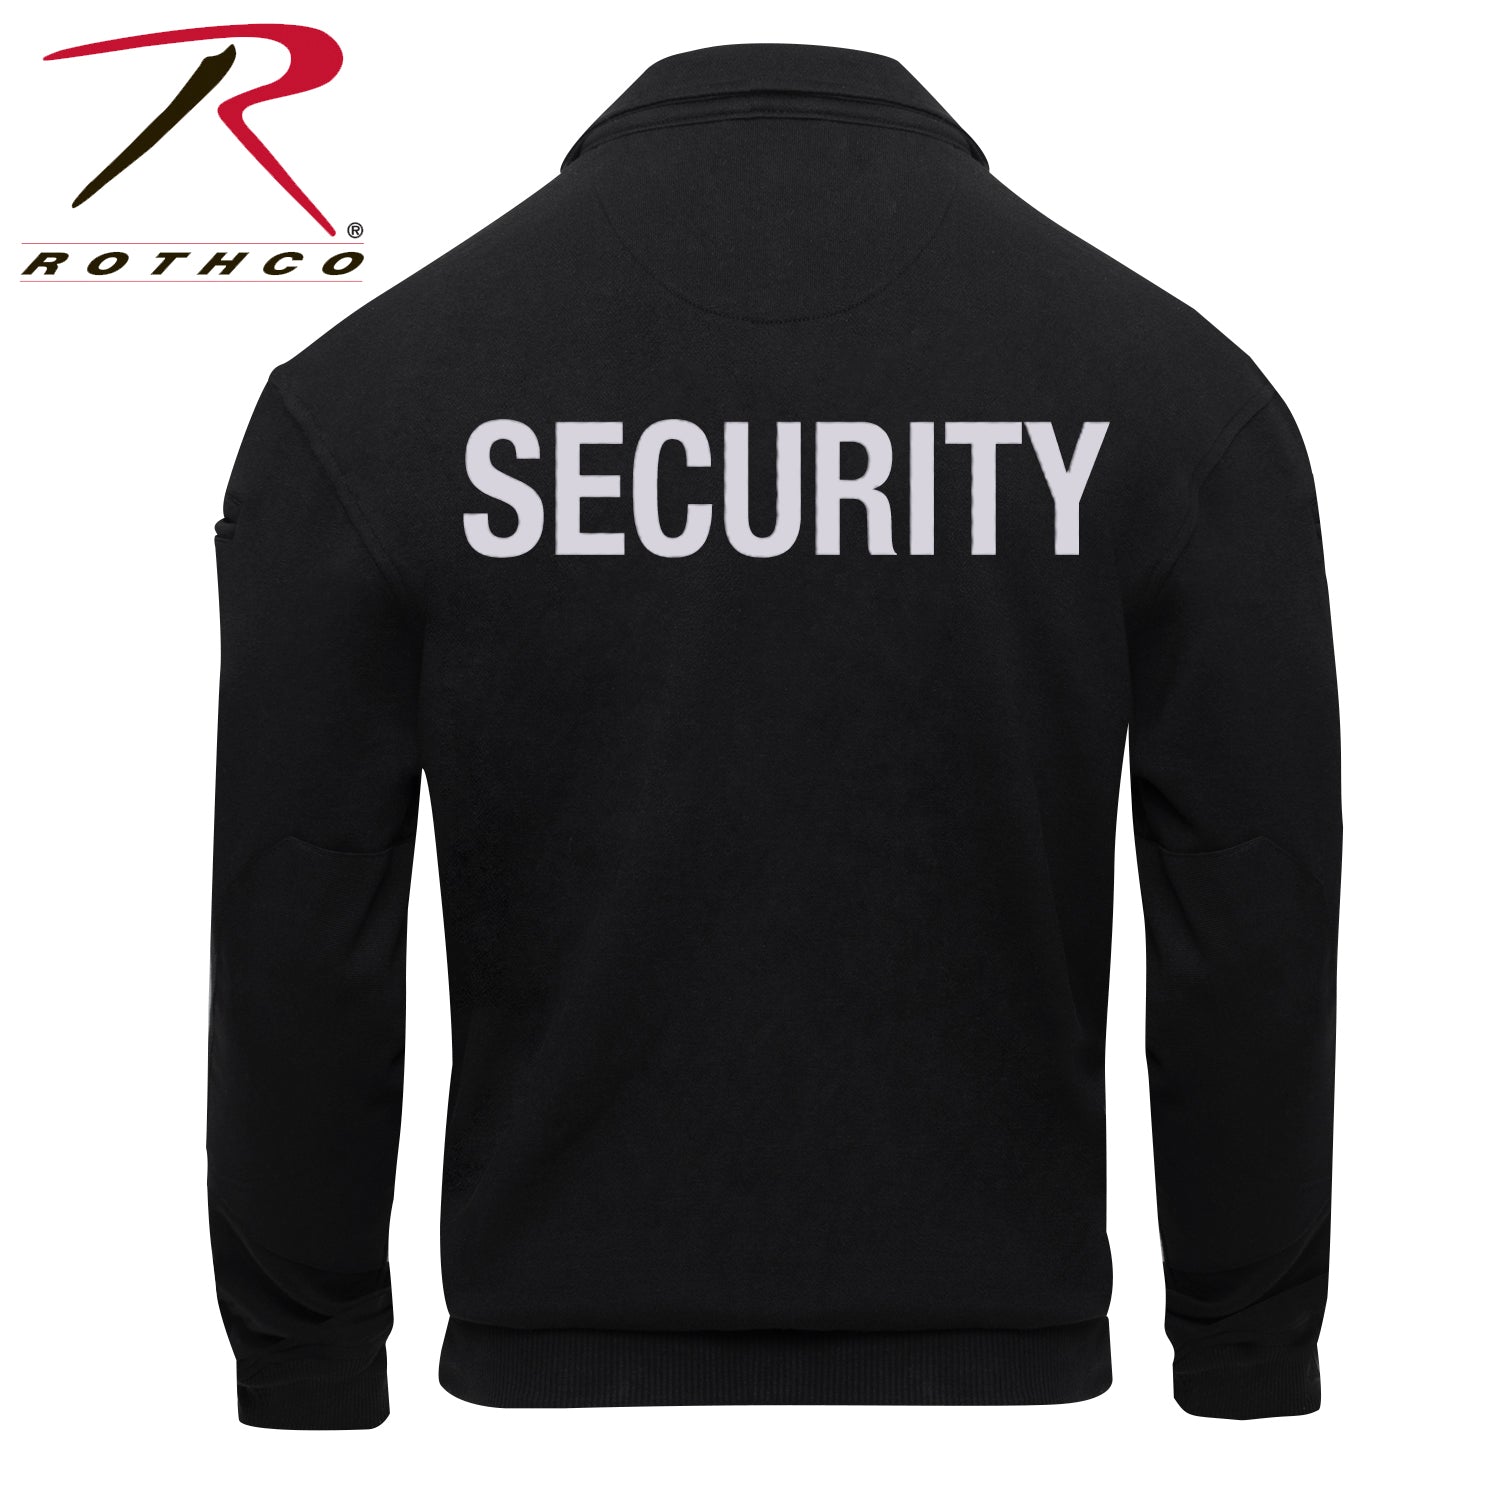 Rothco Security 1/4 Zip Job Shirt